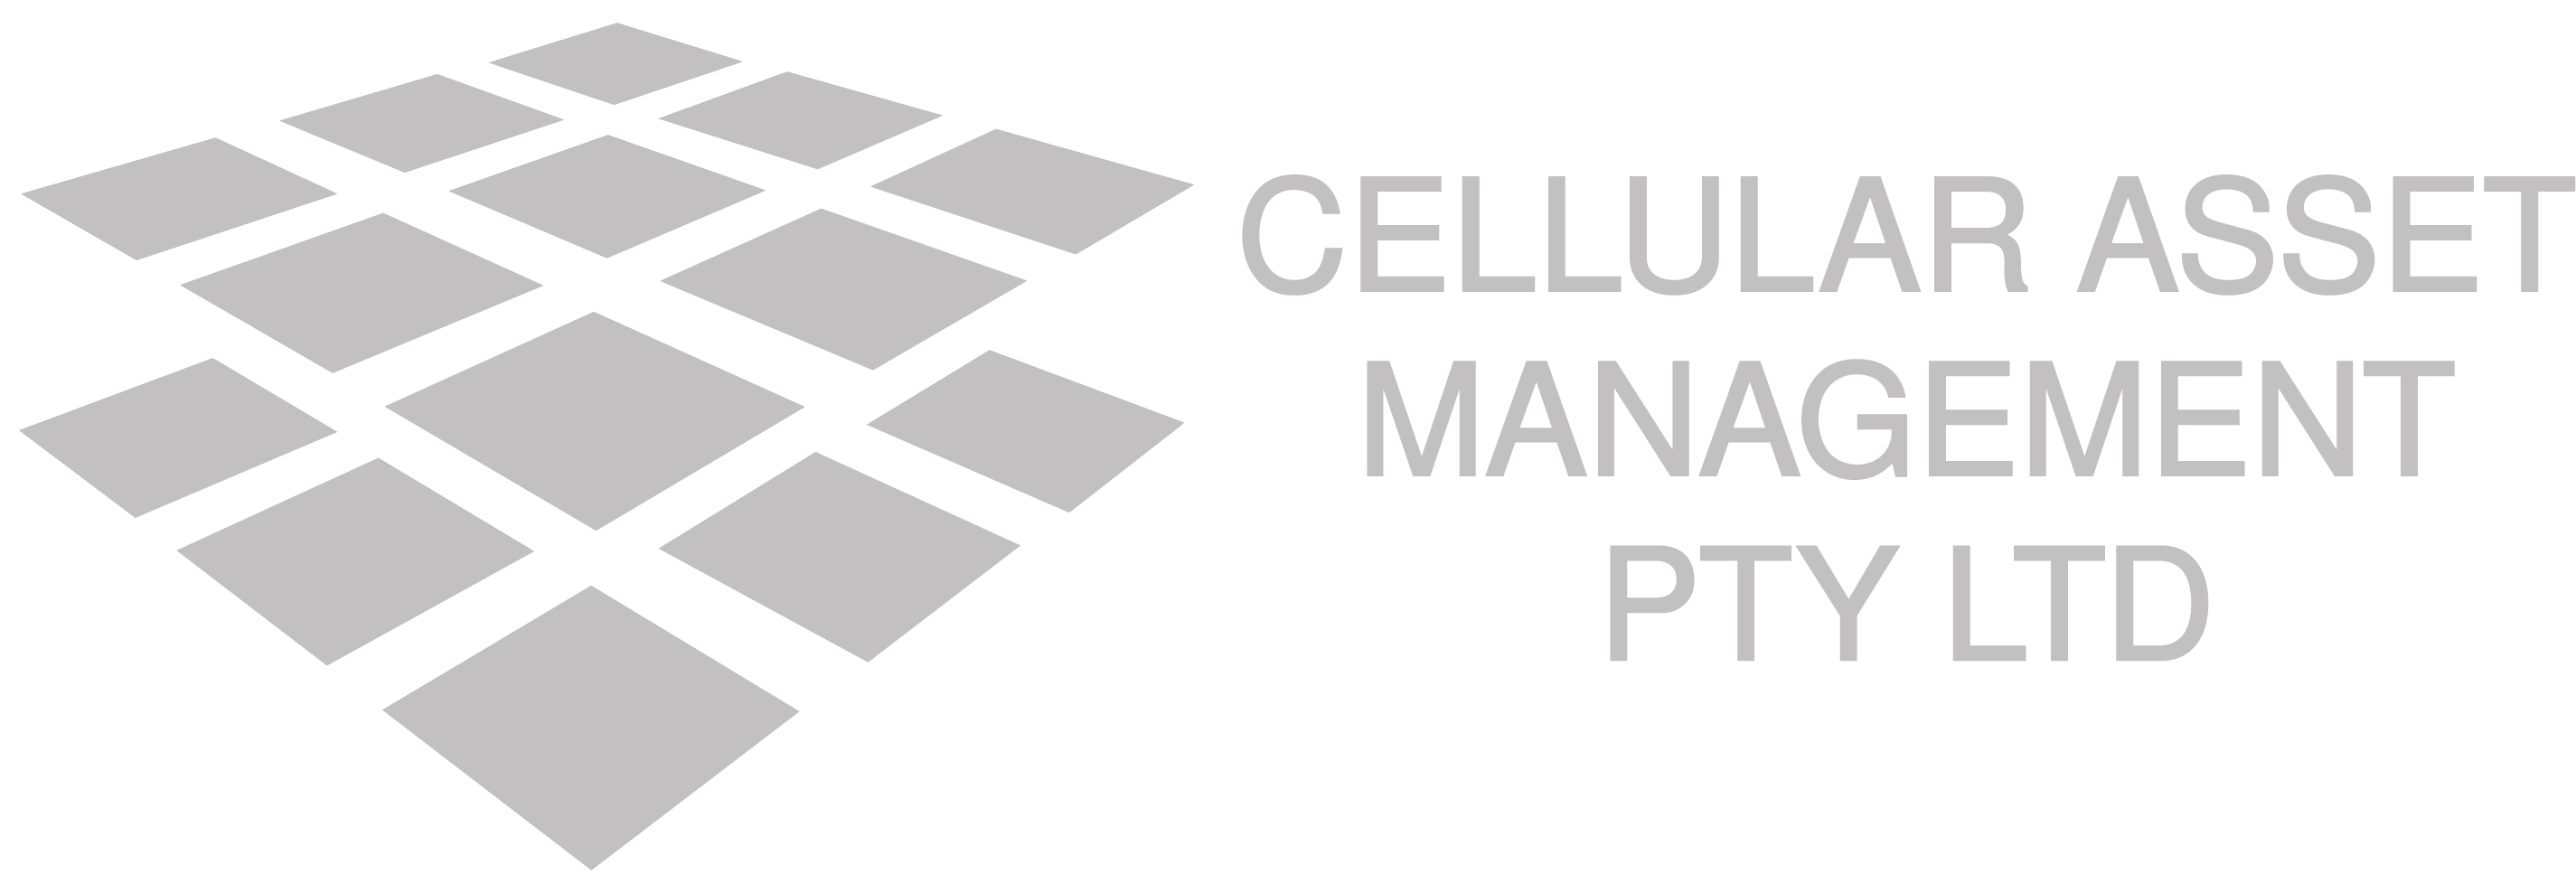 Cellular Asset Management